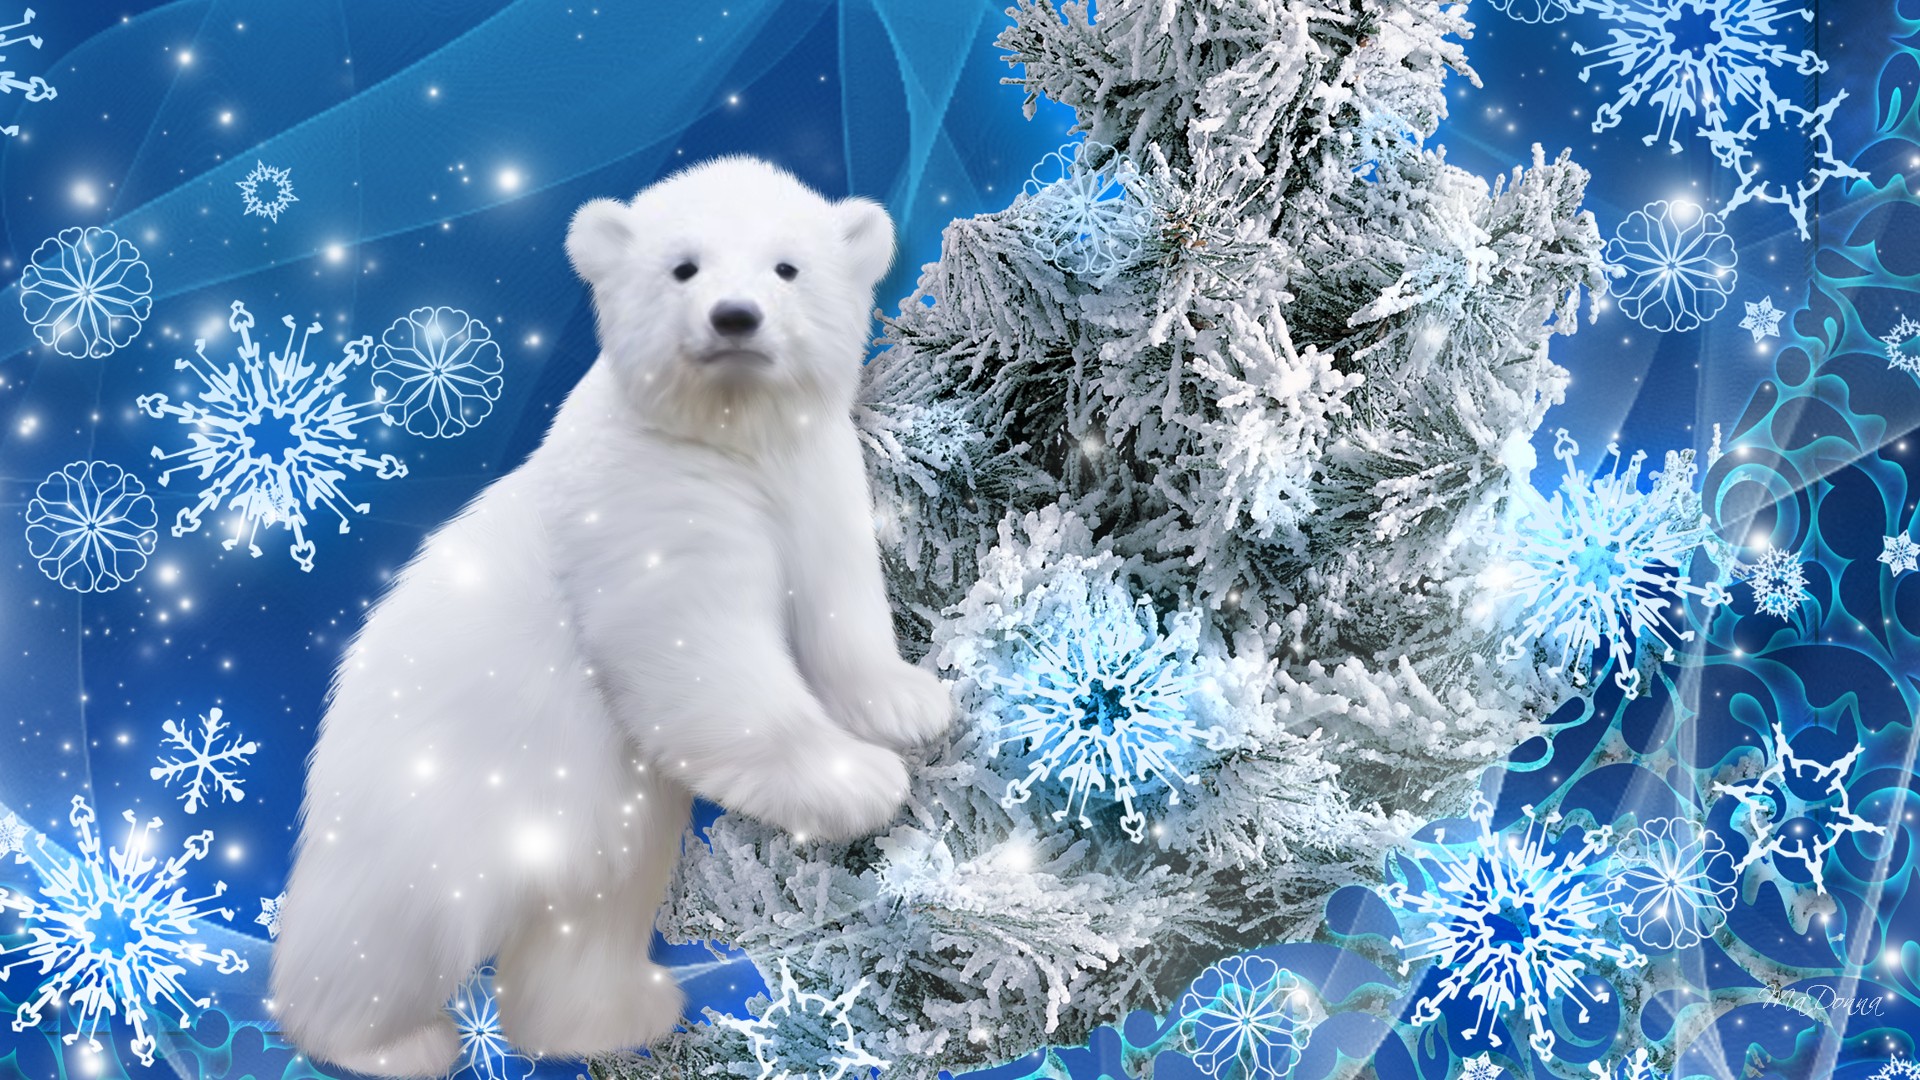 46+] Christmas Polar Bear Wallpaper - WallpaperSafari